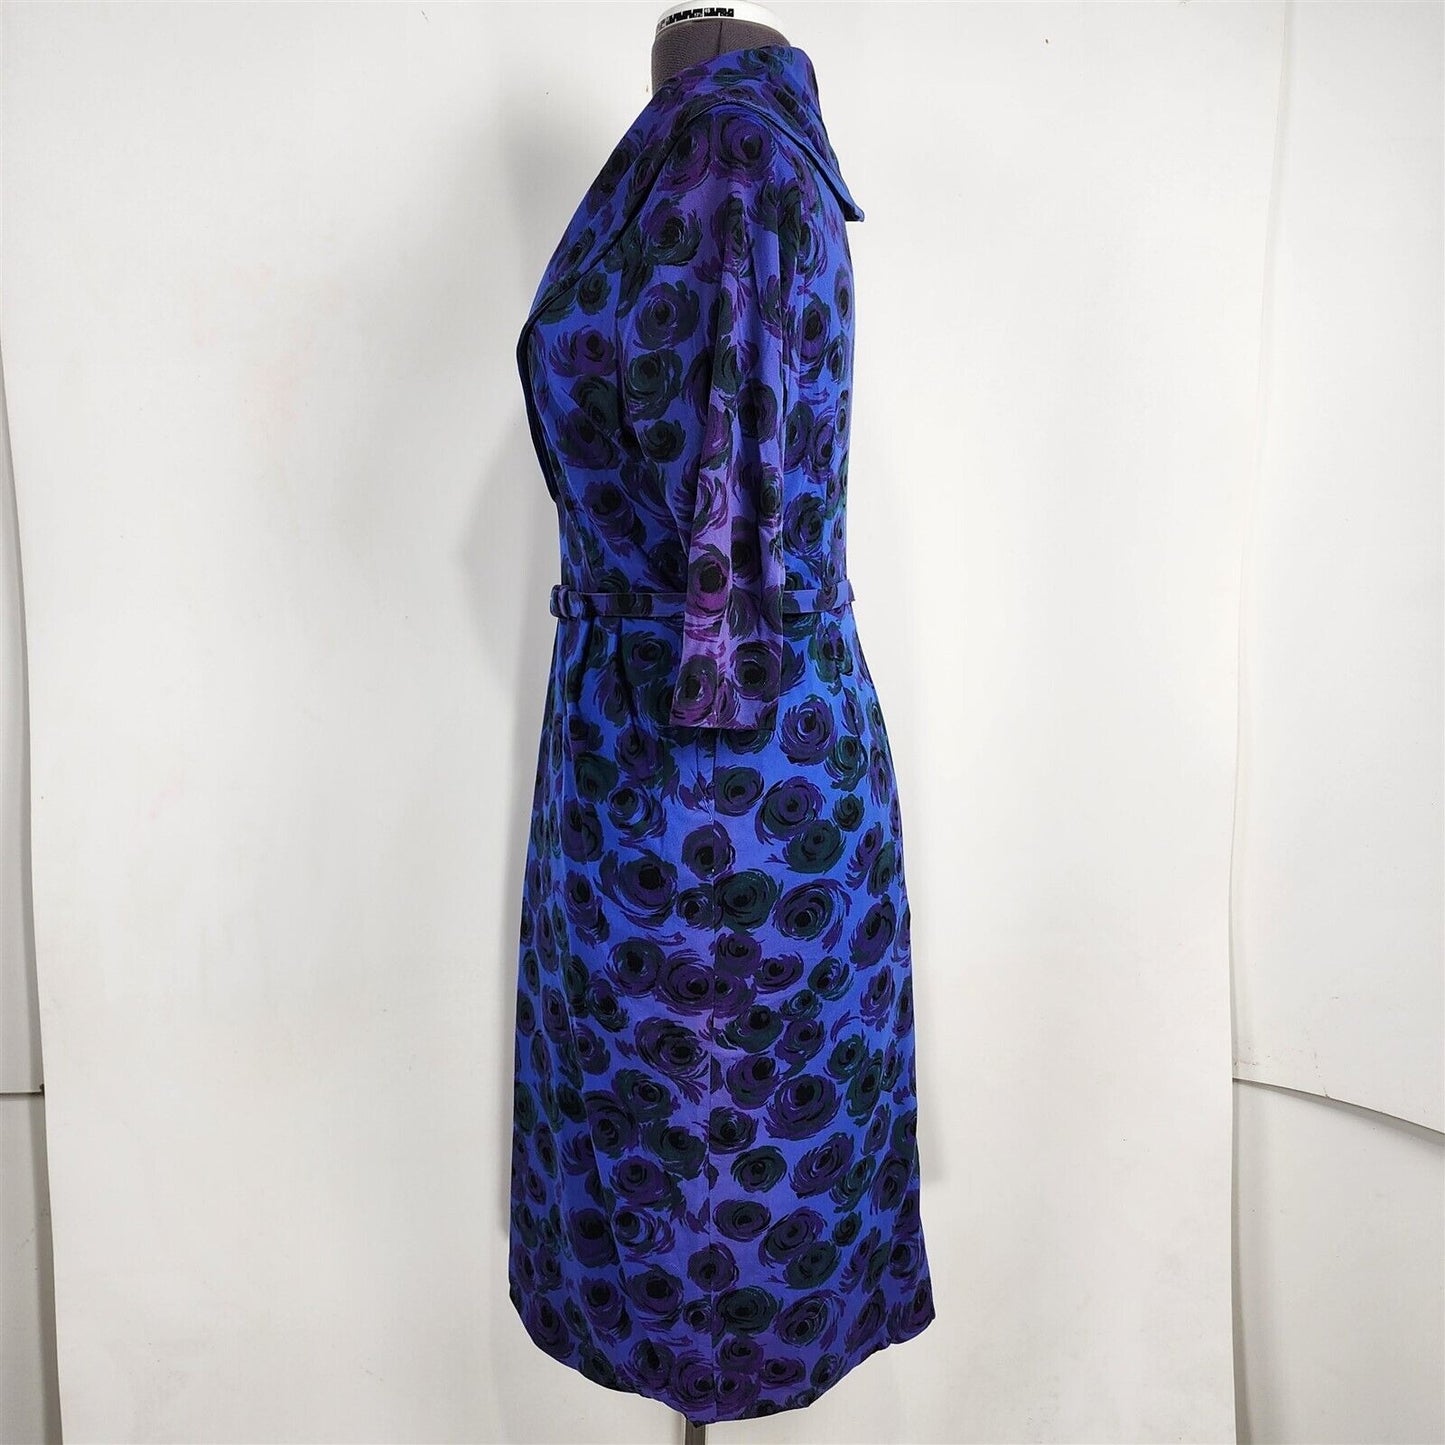 Vintage 1960s/70s Blue & Purple Jersey Knit Floral Print Dress w/ Belt